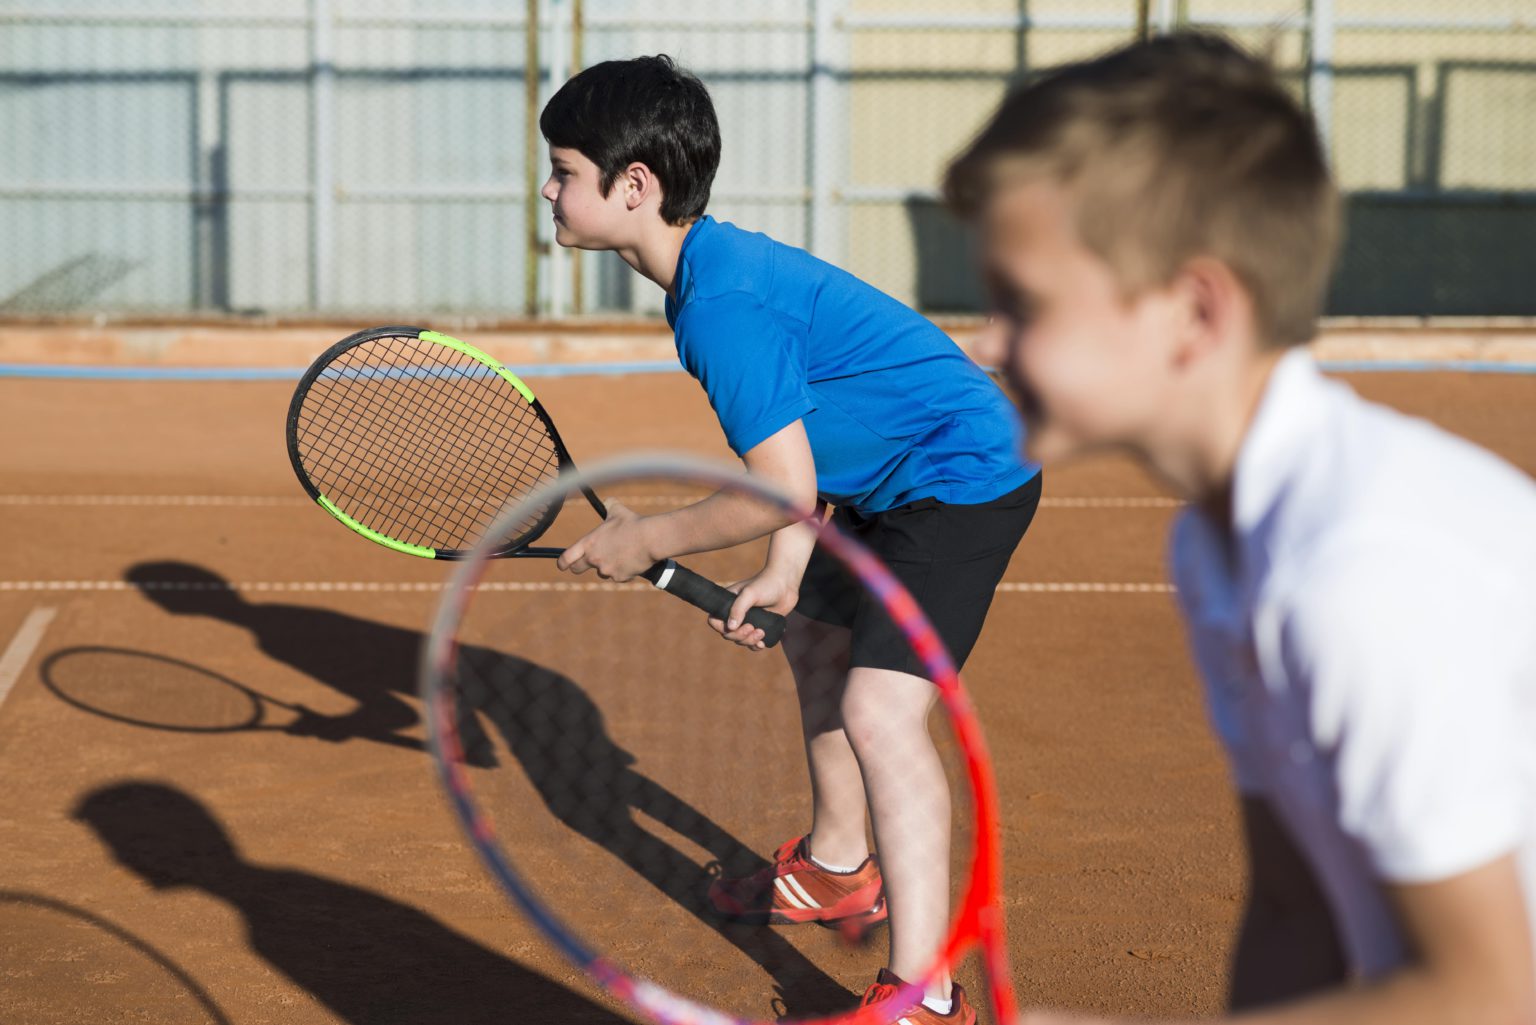 sideways-kids-playing-doubles-tennis-min-1536x1025